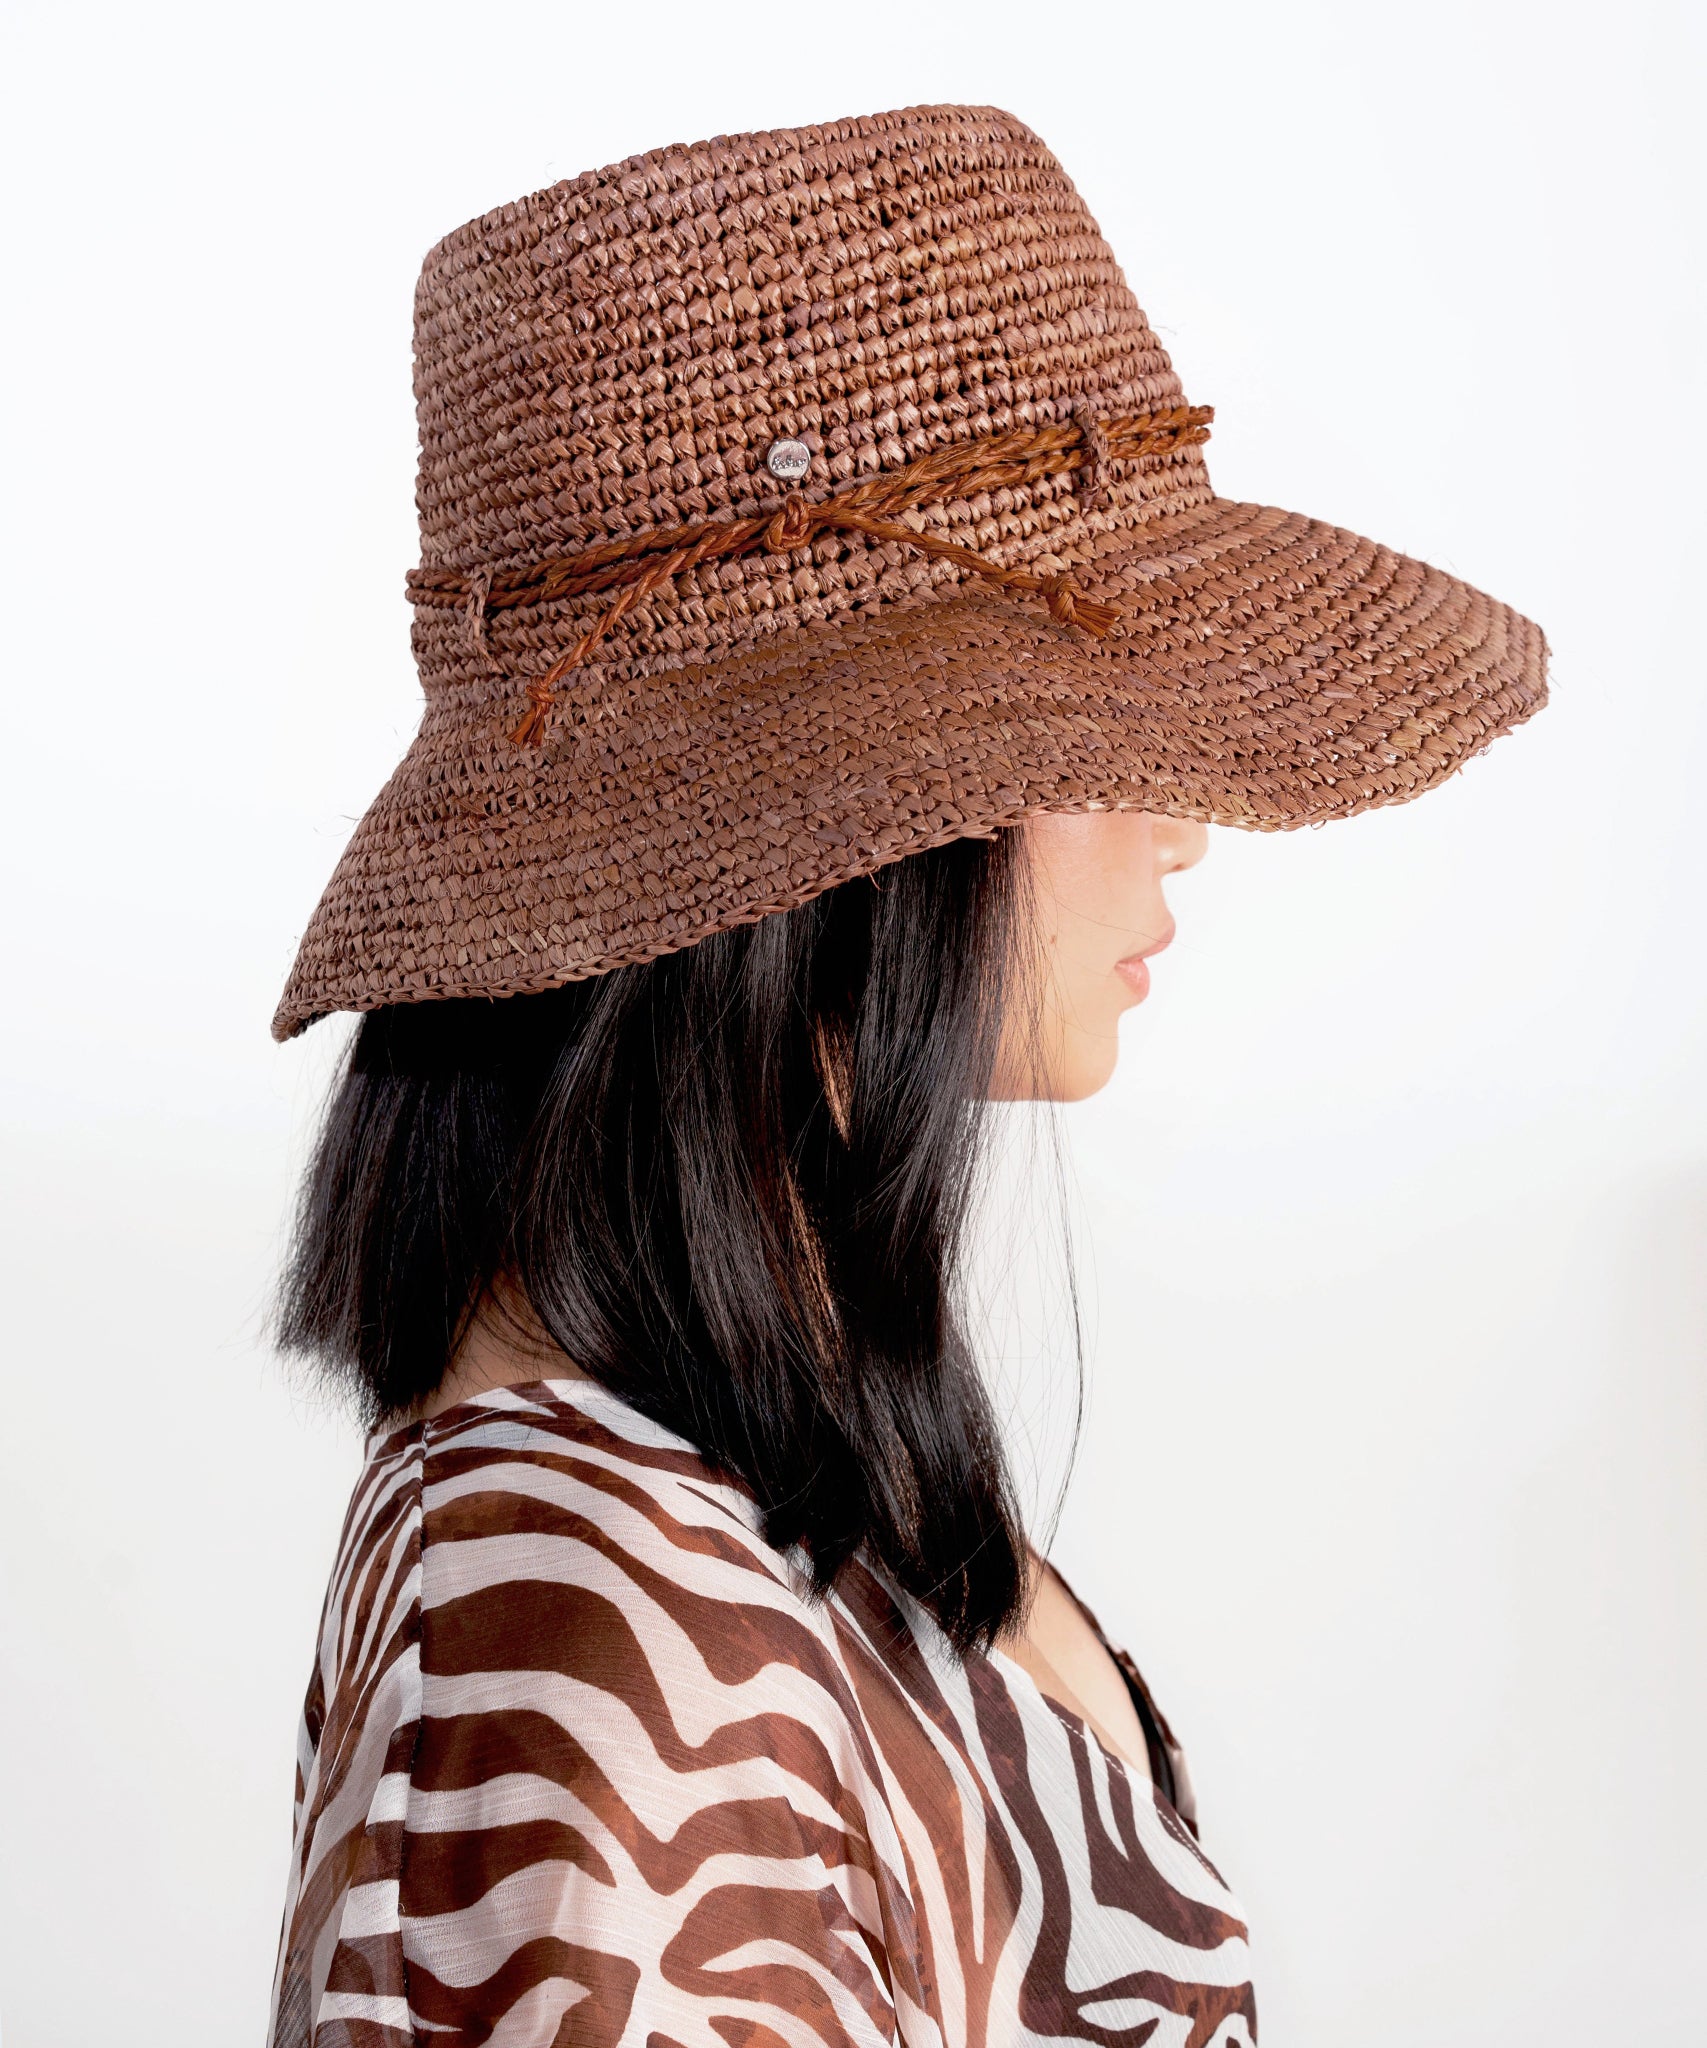 Echo Raffia Packable Bucket Hat In Natural – Sandpipers